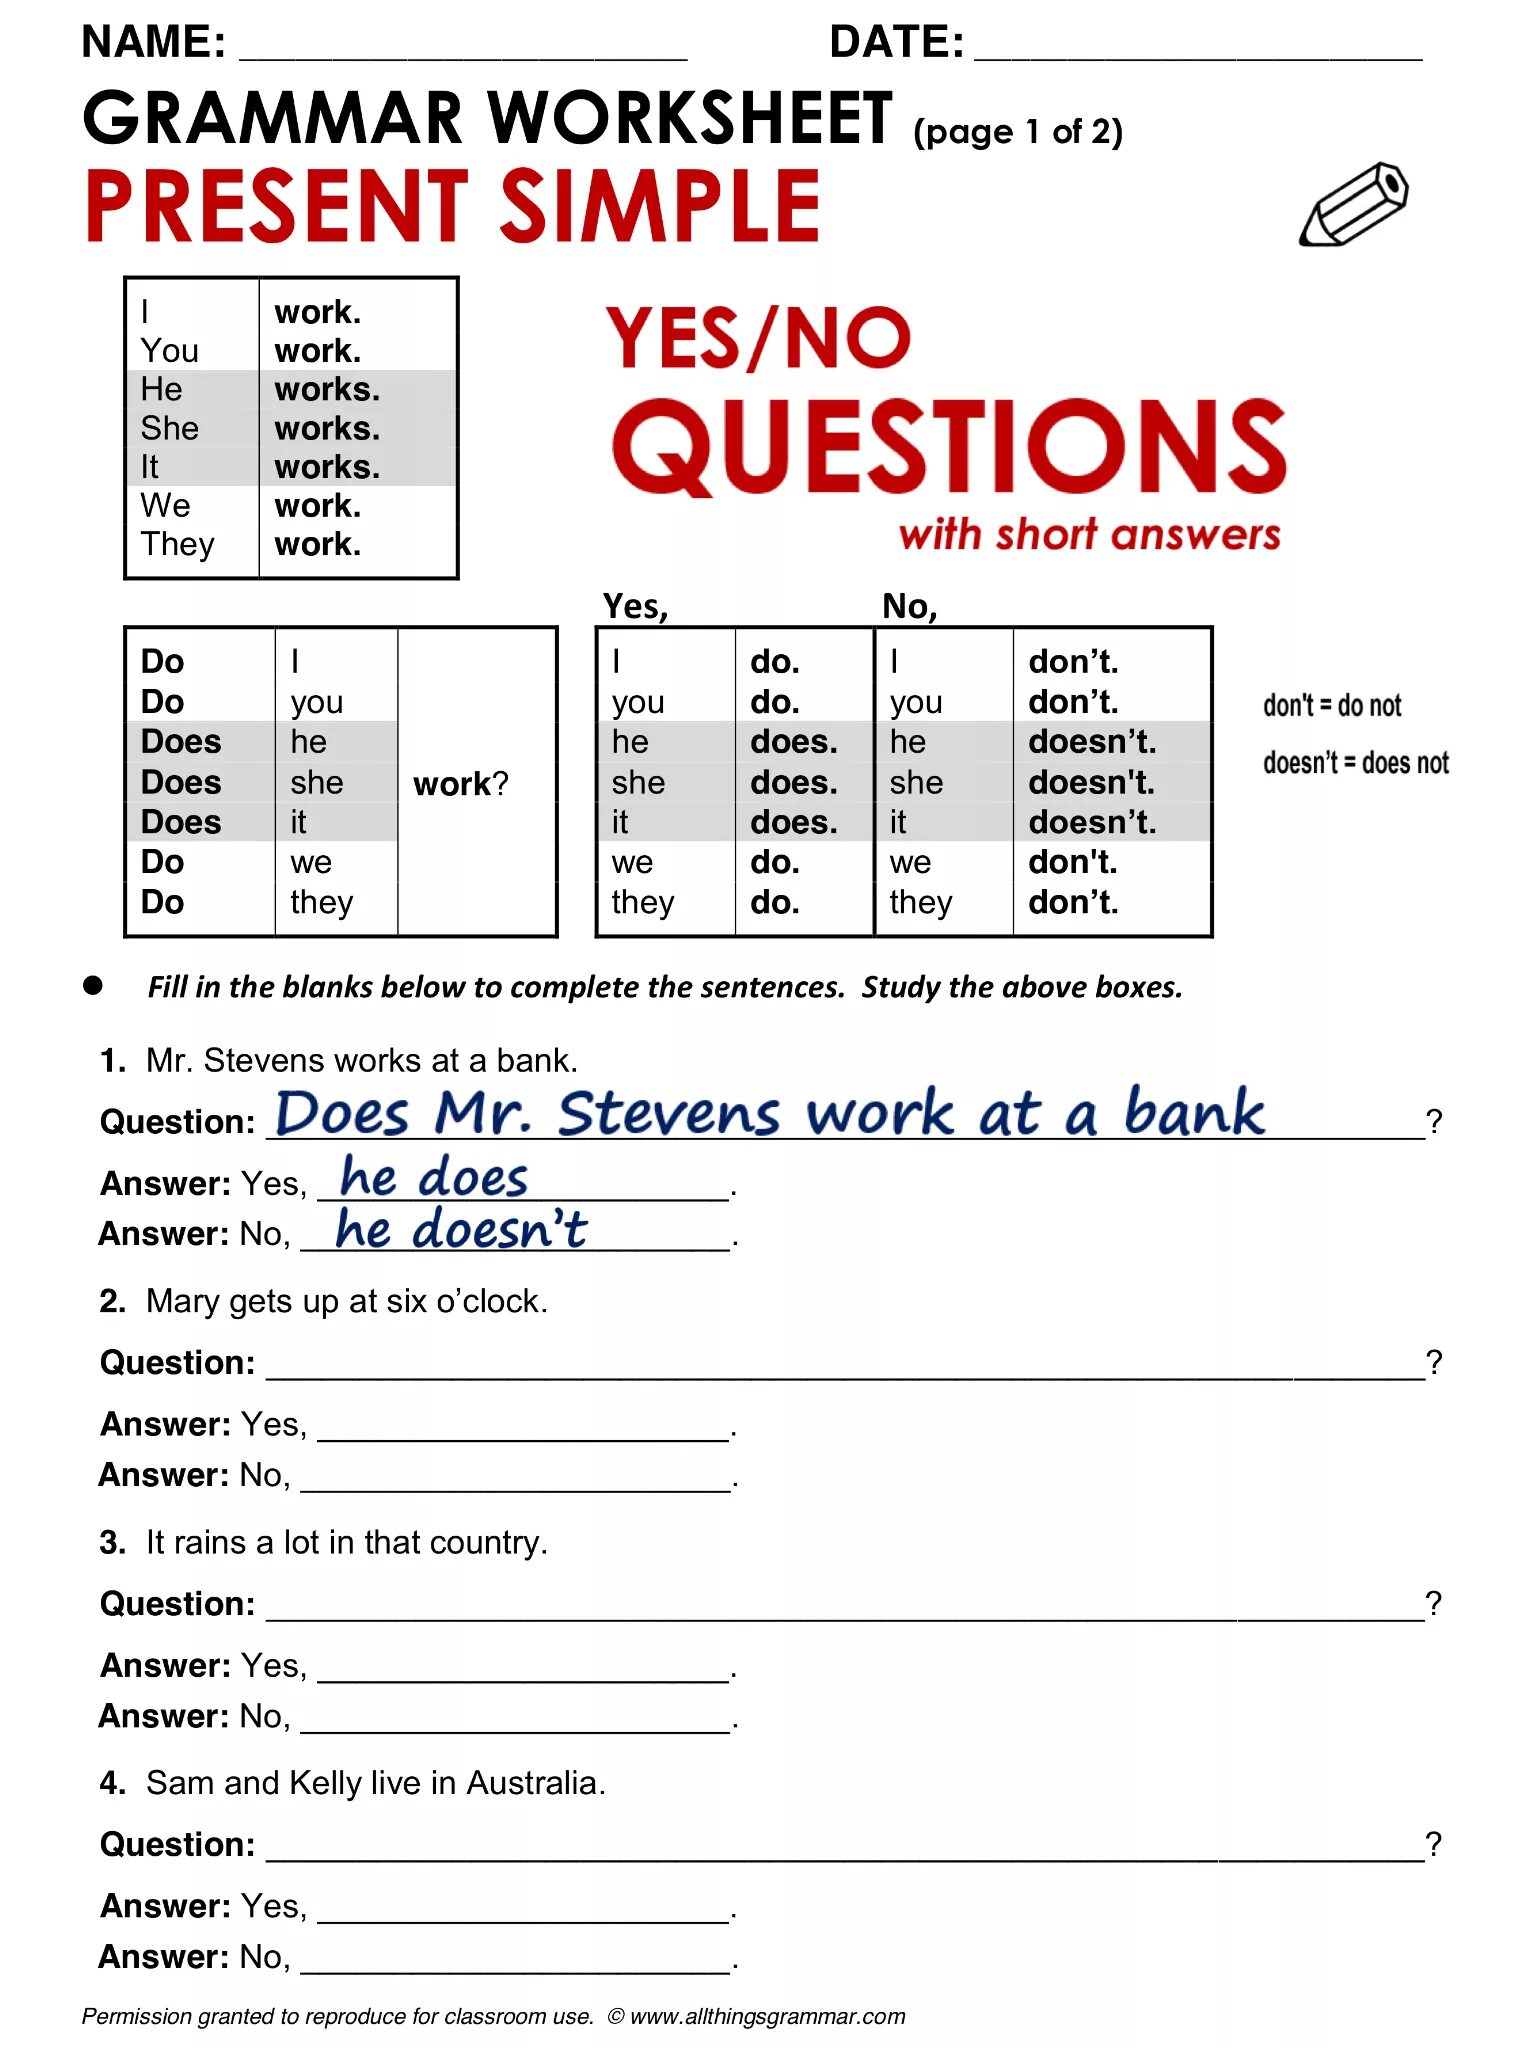 Present simple вопросы Worksheets. Специальные вопросы в present simple Worksheets. Present simple вопросы Worksheets for Kids. Вопросы Worksheets. Page past